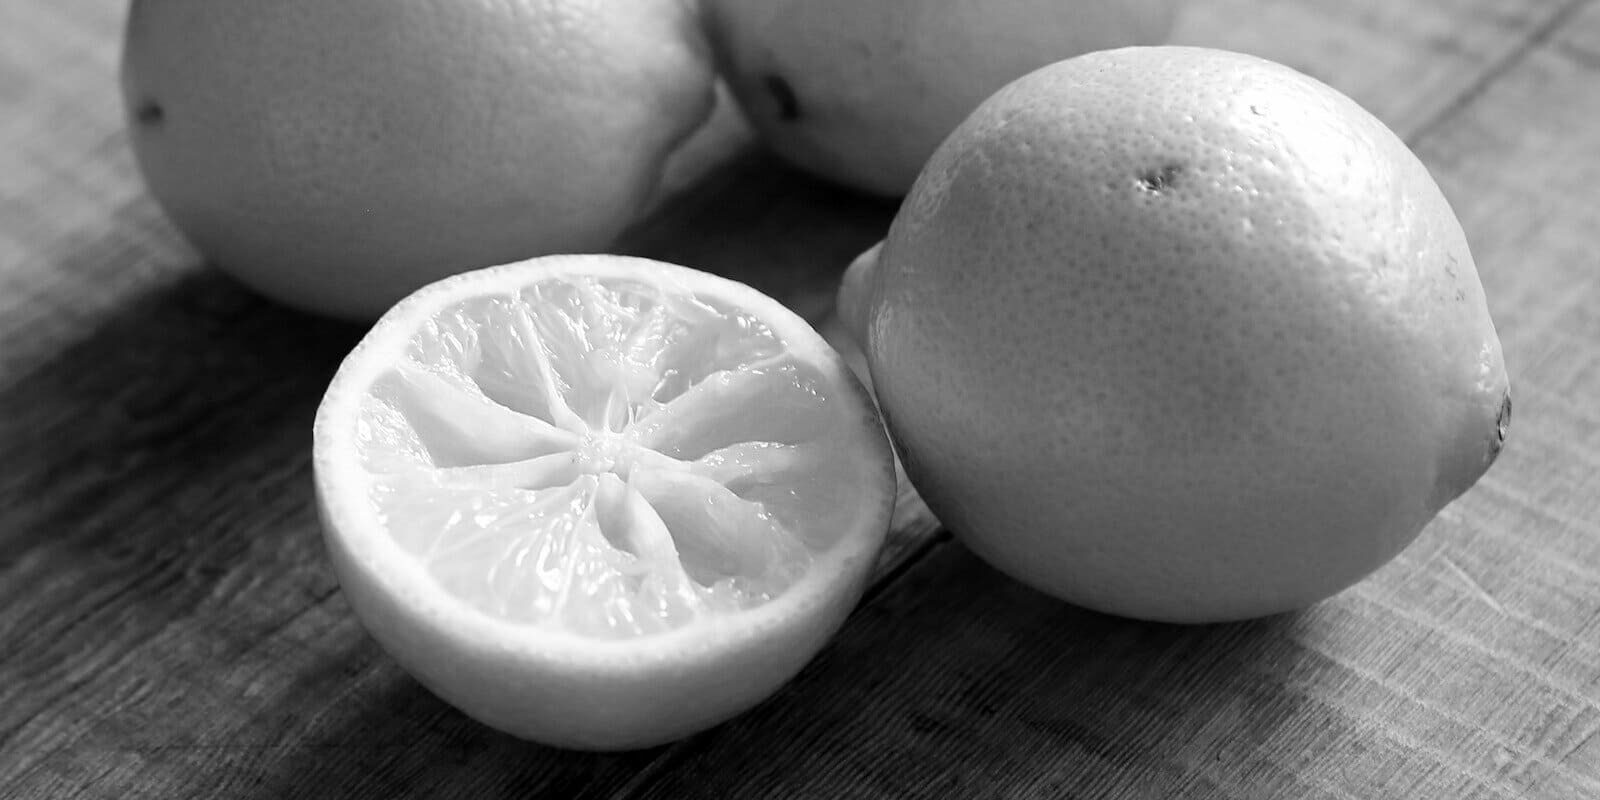 Whole and half lemons